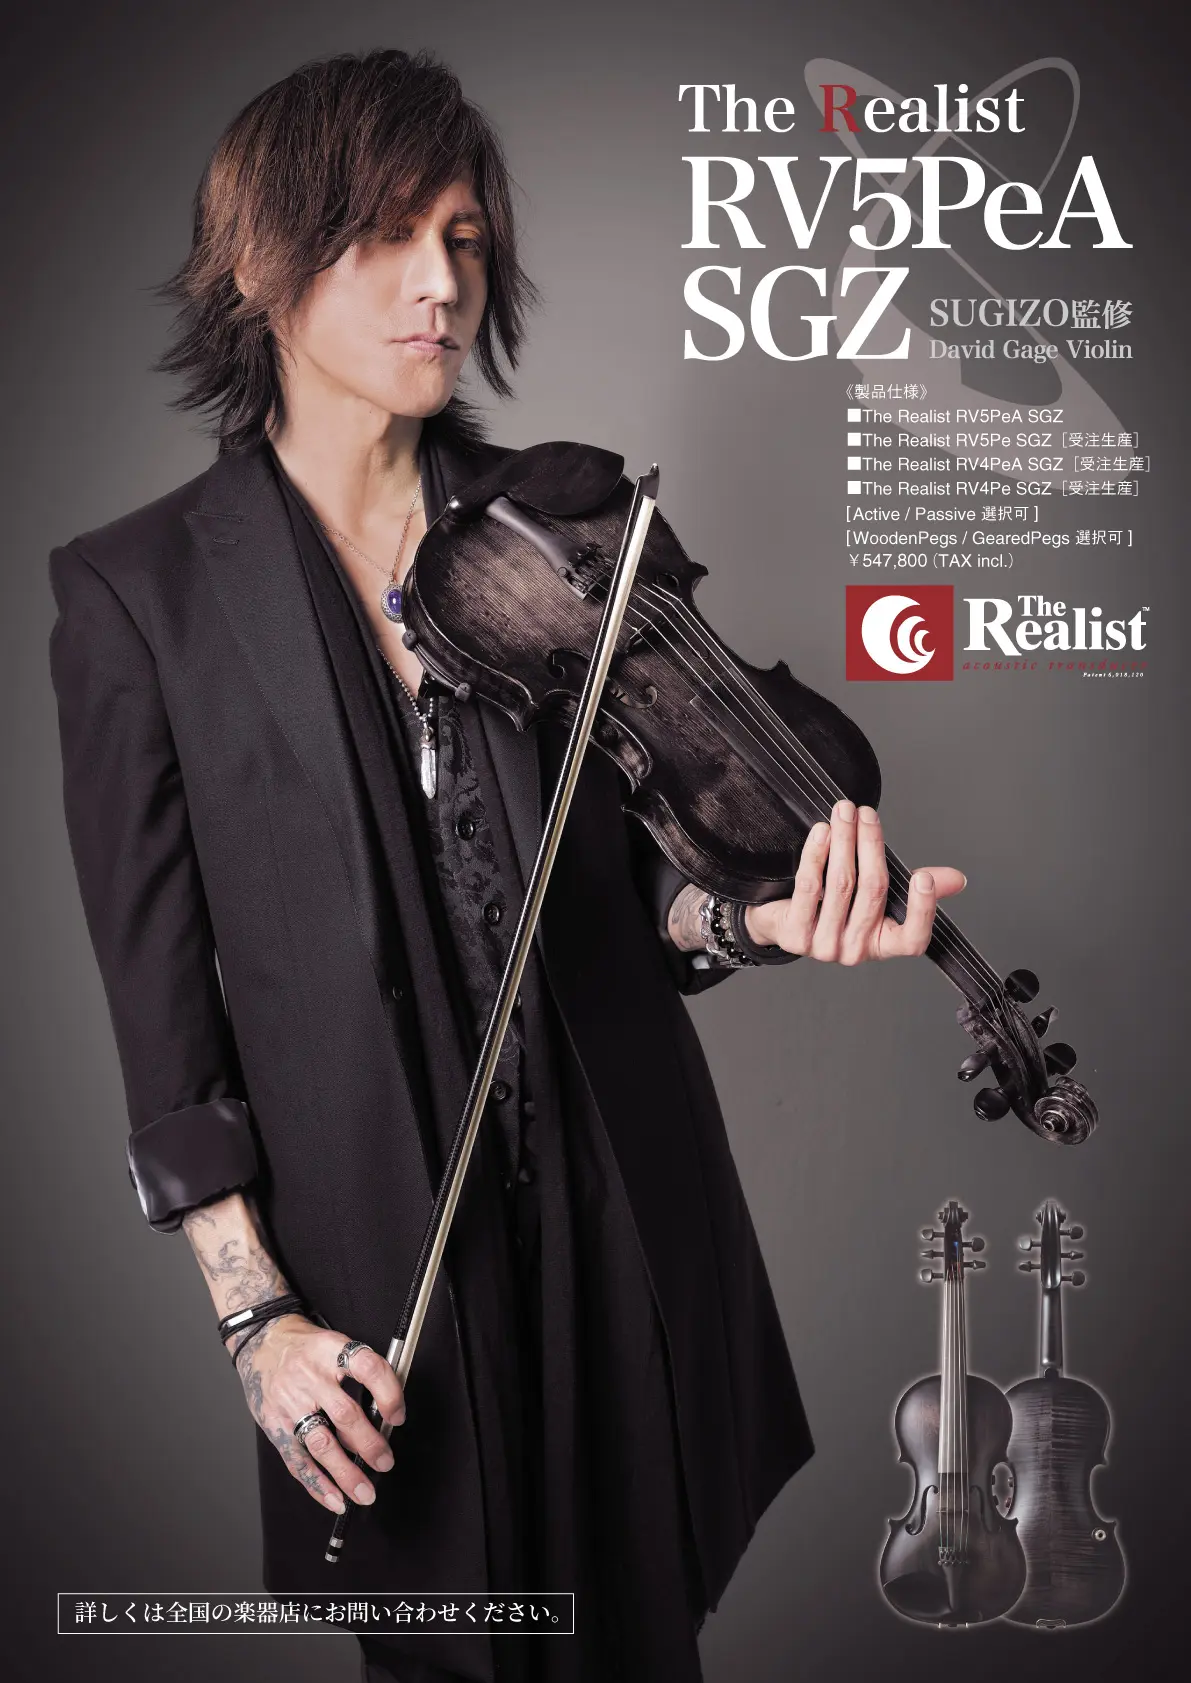 sugizo violin - Está casado Sugizo